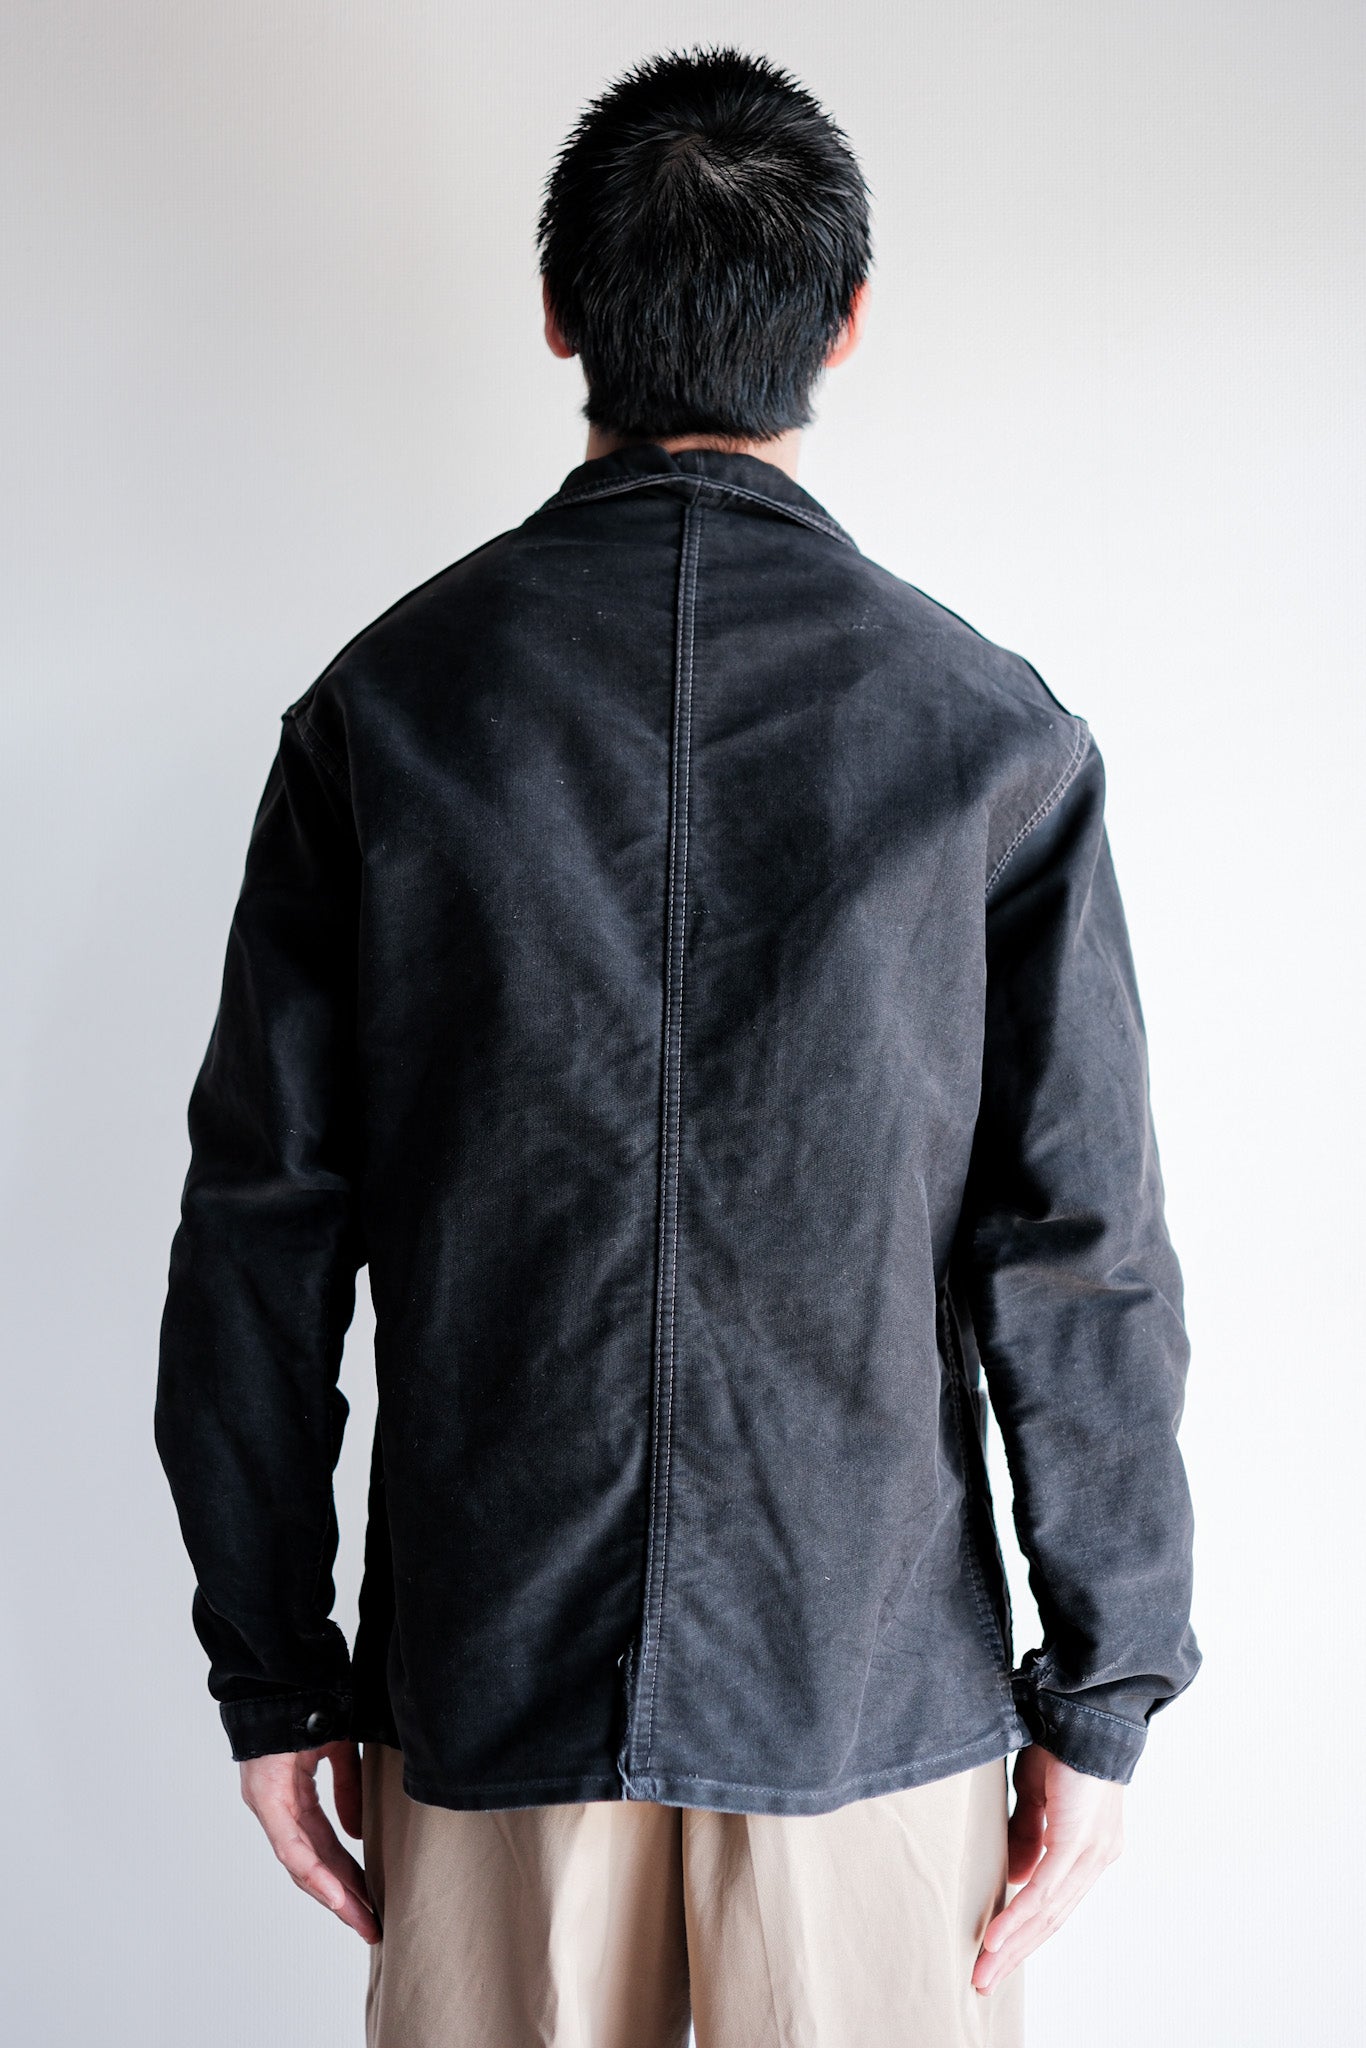 [~ 50's] French Vintage Black Moleskin Work Jacket Size.52 "Le Mont St. Michel"